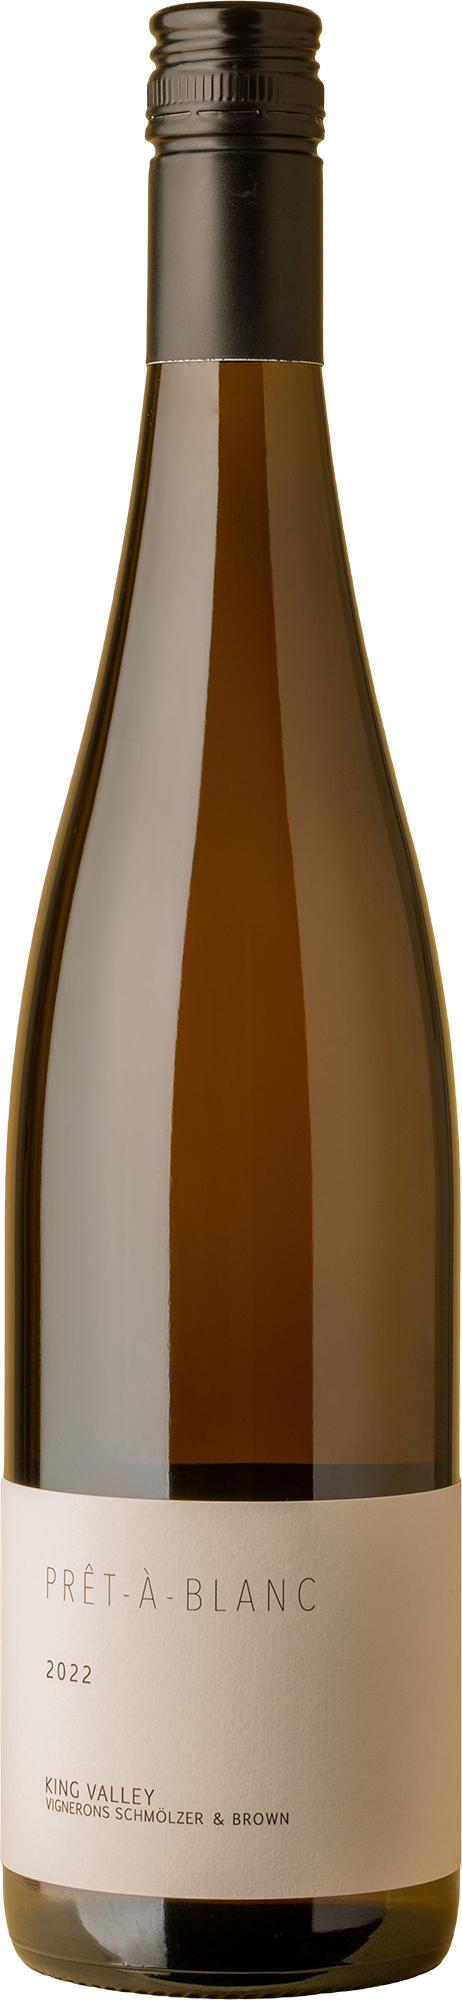 Schmölzer & Brown - Prêt‐à‐Blanc Pinot Gris/Riesling/Gewurtztraminer 2022